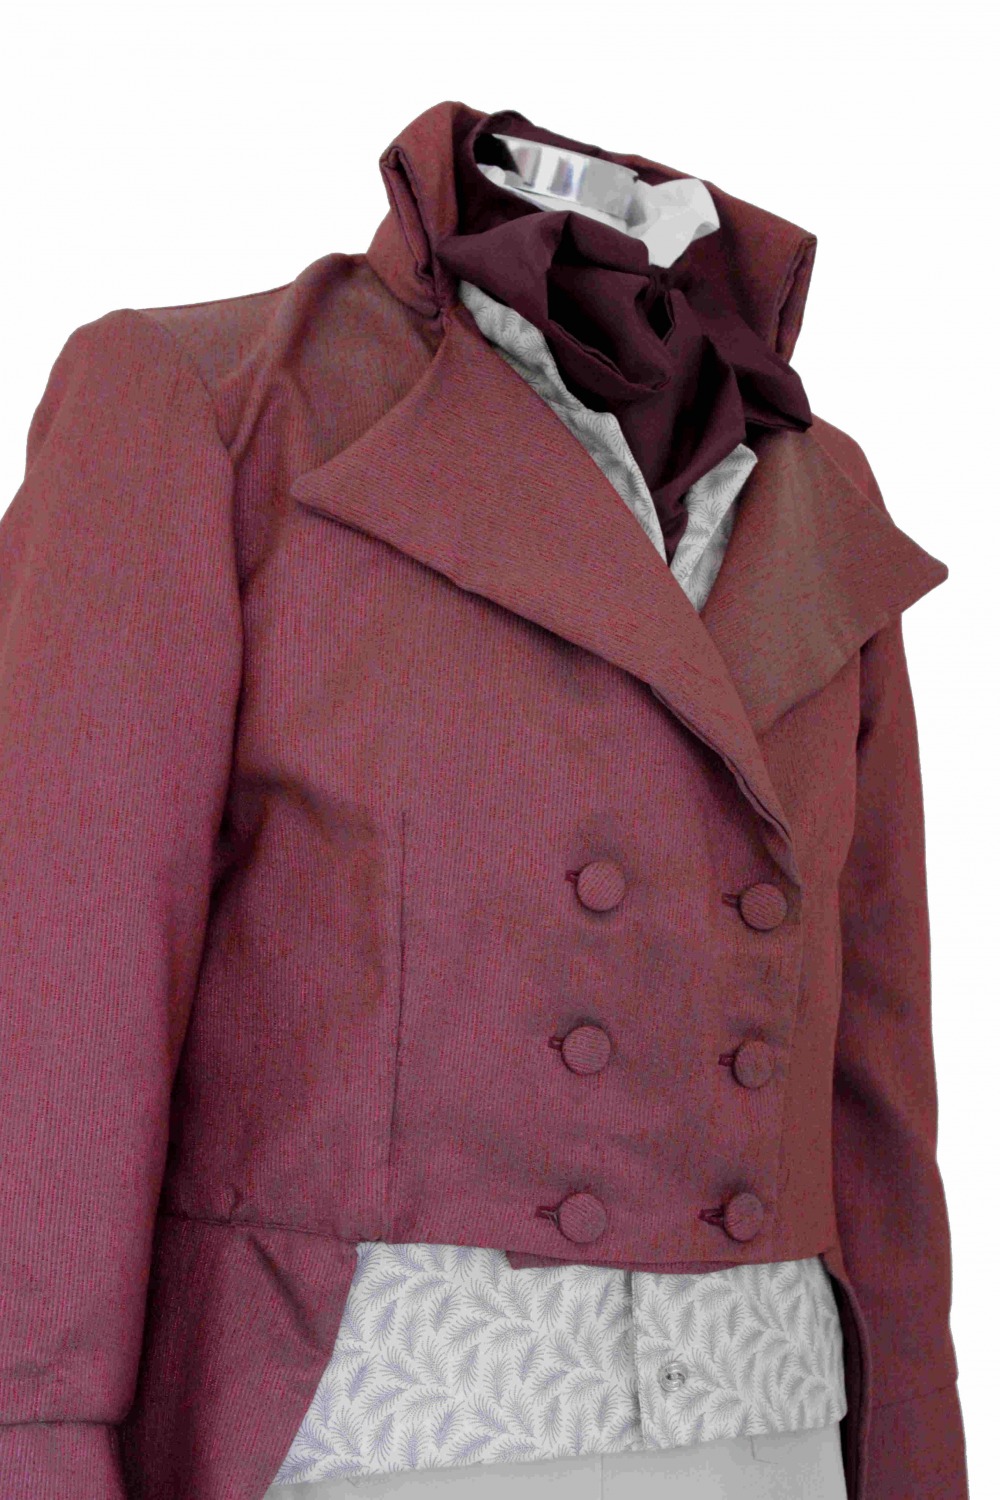 Deluxe Men's Regency Mr. Darcy Victorian Costume Size L/XL Image